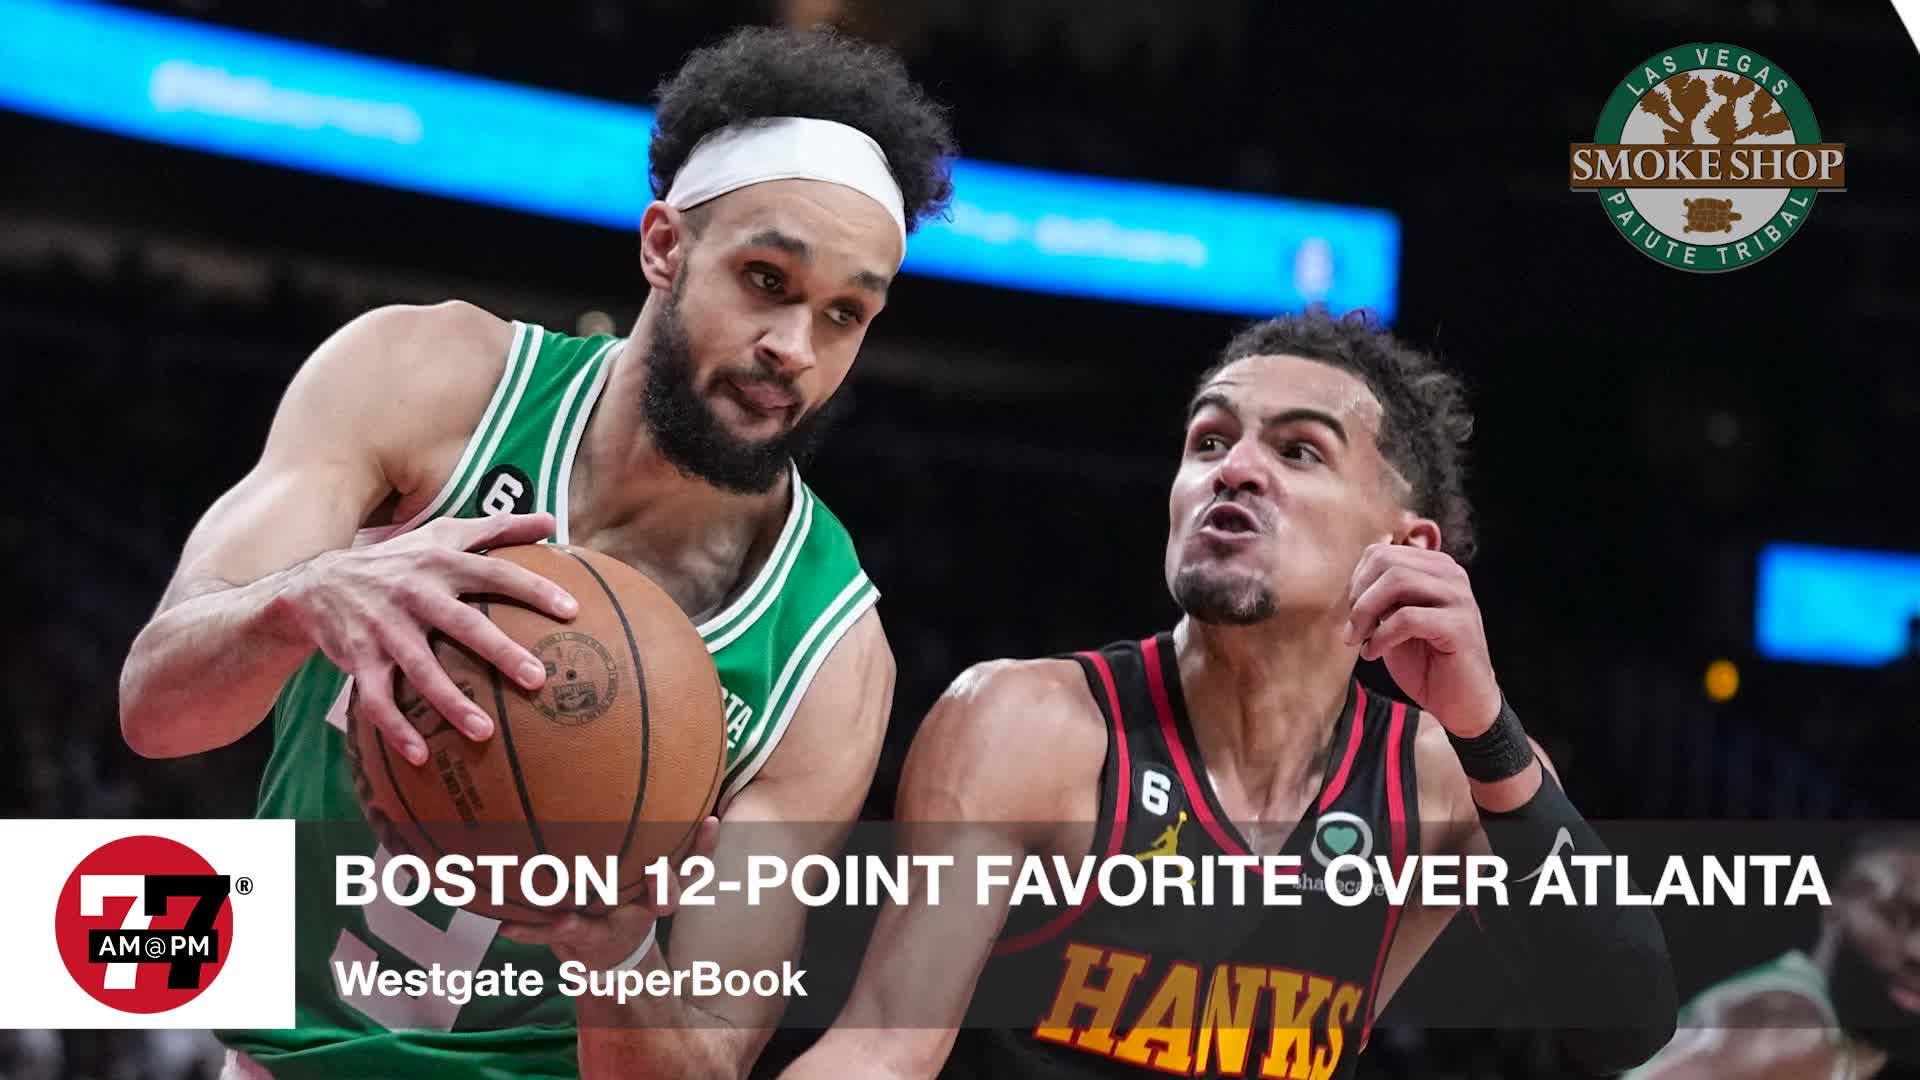 Boston 12-point favorite over Atlanta